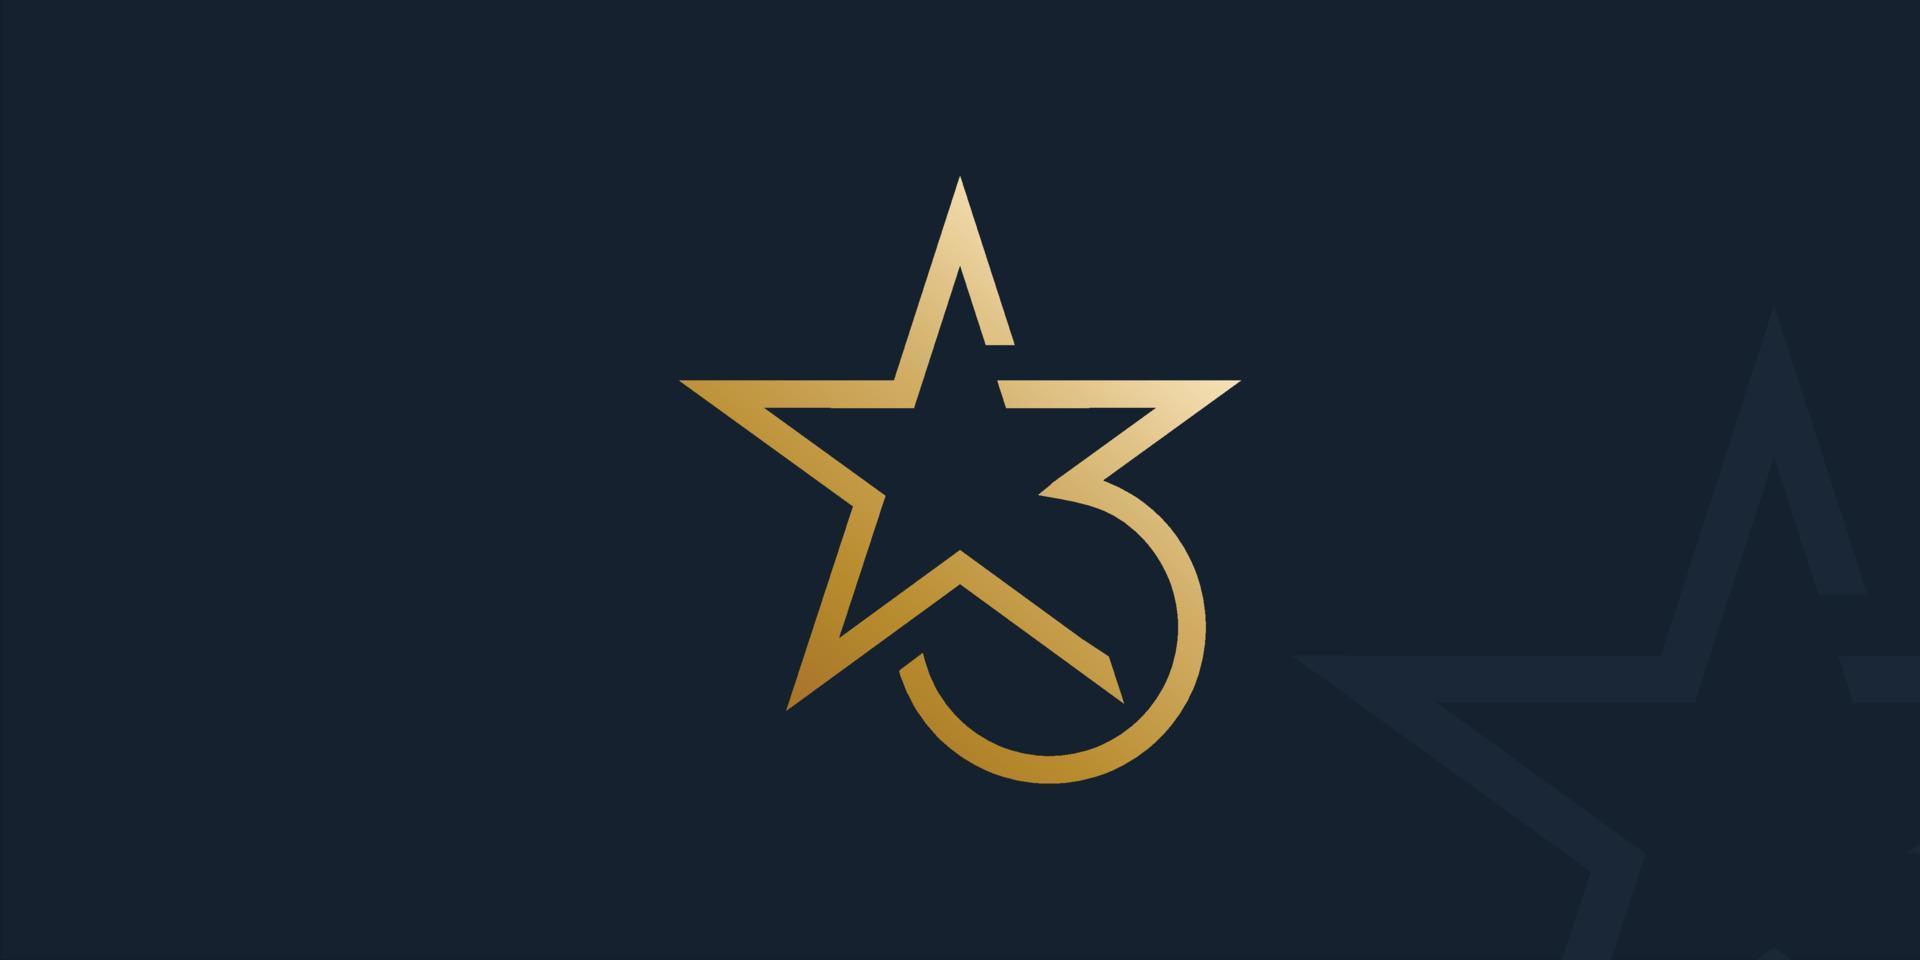 Modern and elegant 3 star logo vector